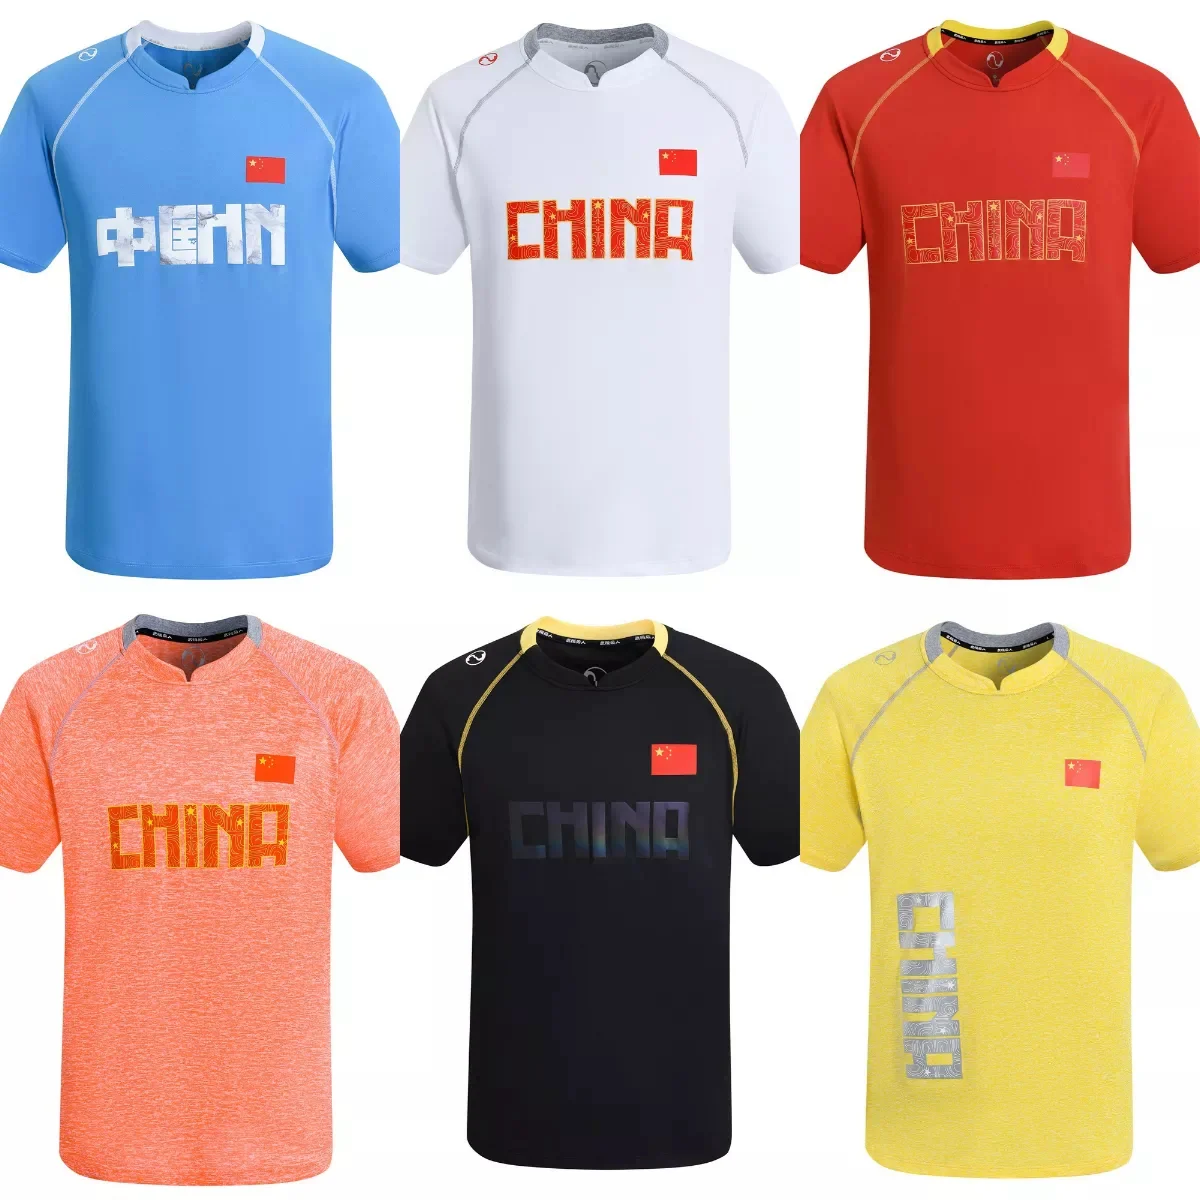 WYTR 우슈 무술 중국 스타일 반팔 티셔츠, 쿵푸 셔츠, 클래식 유니폼, 유니섹스 셔츠 상의